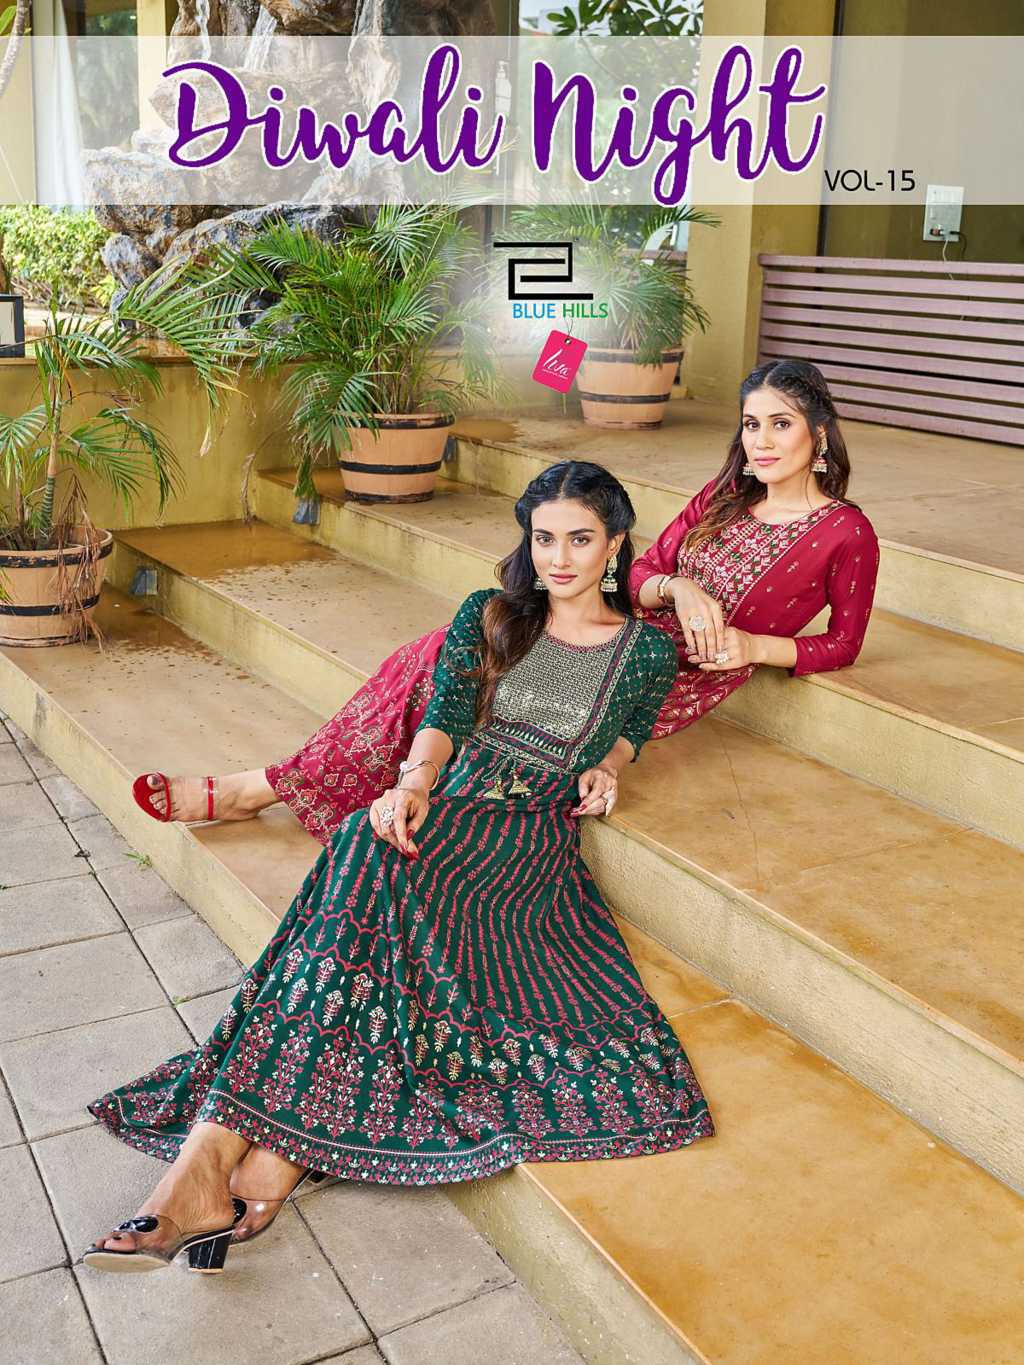 Diwali Dresses For Women: Outfit Guide by Jaipur Kurti - Jaipur Kurti